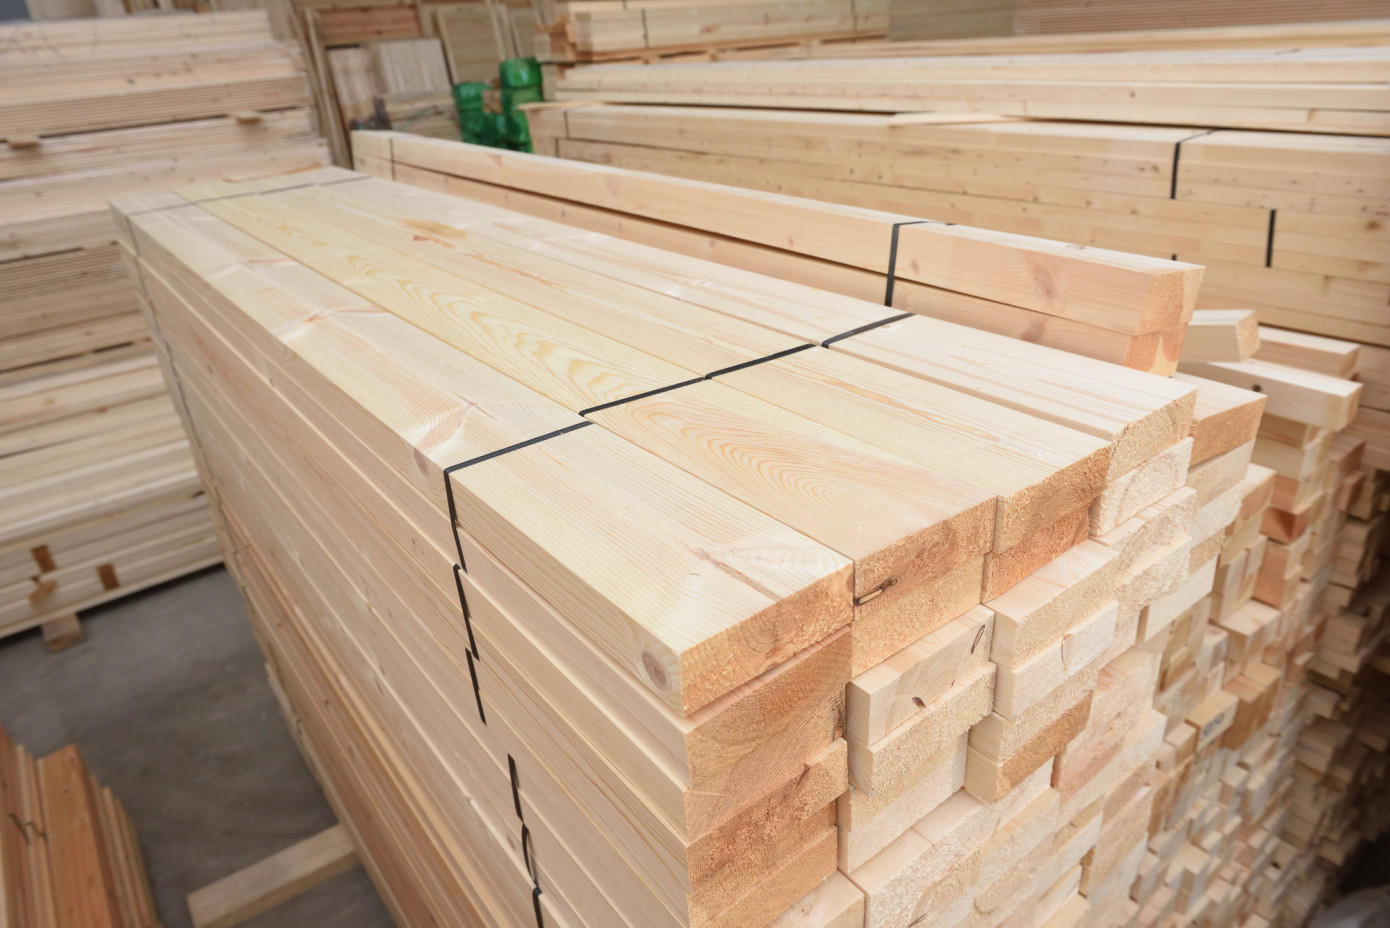 Ufastroysnab to start lumber exports to Turkey and Iran